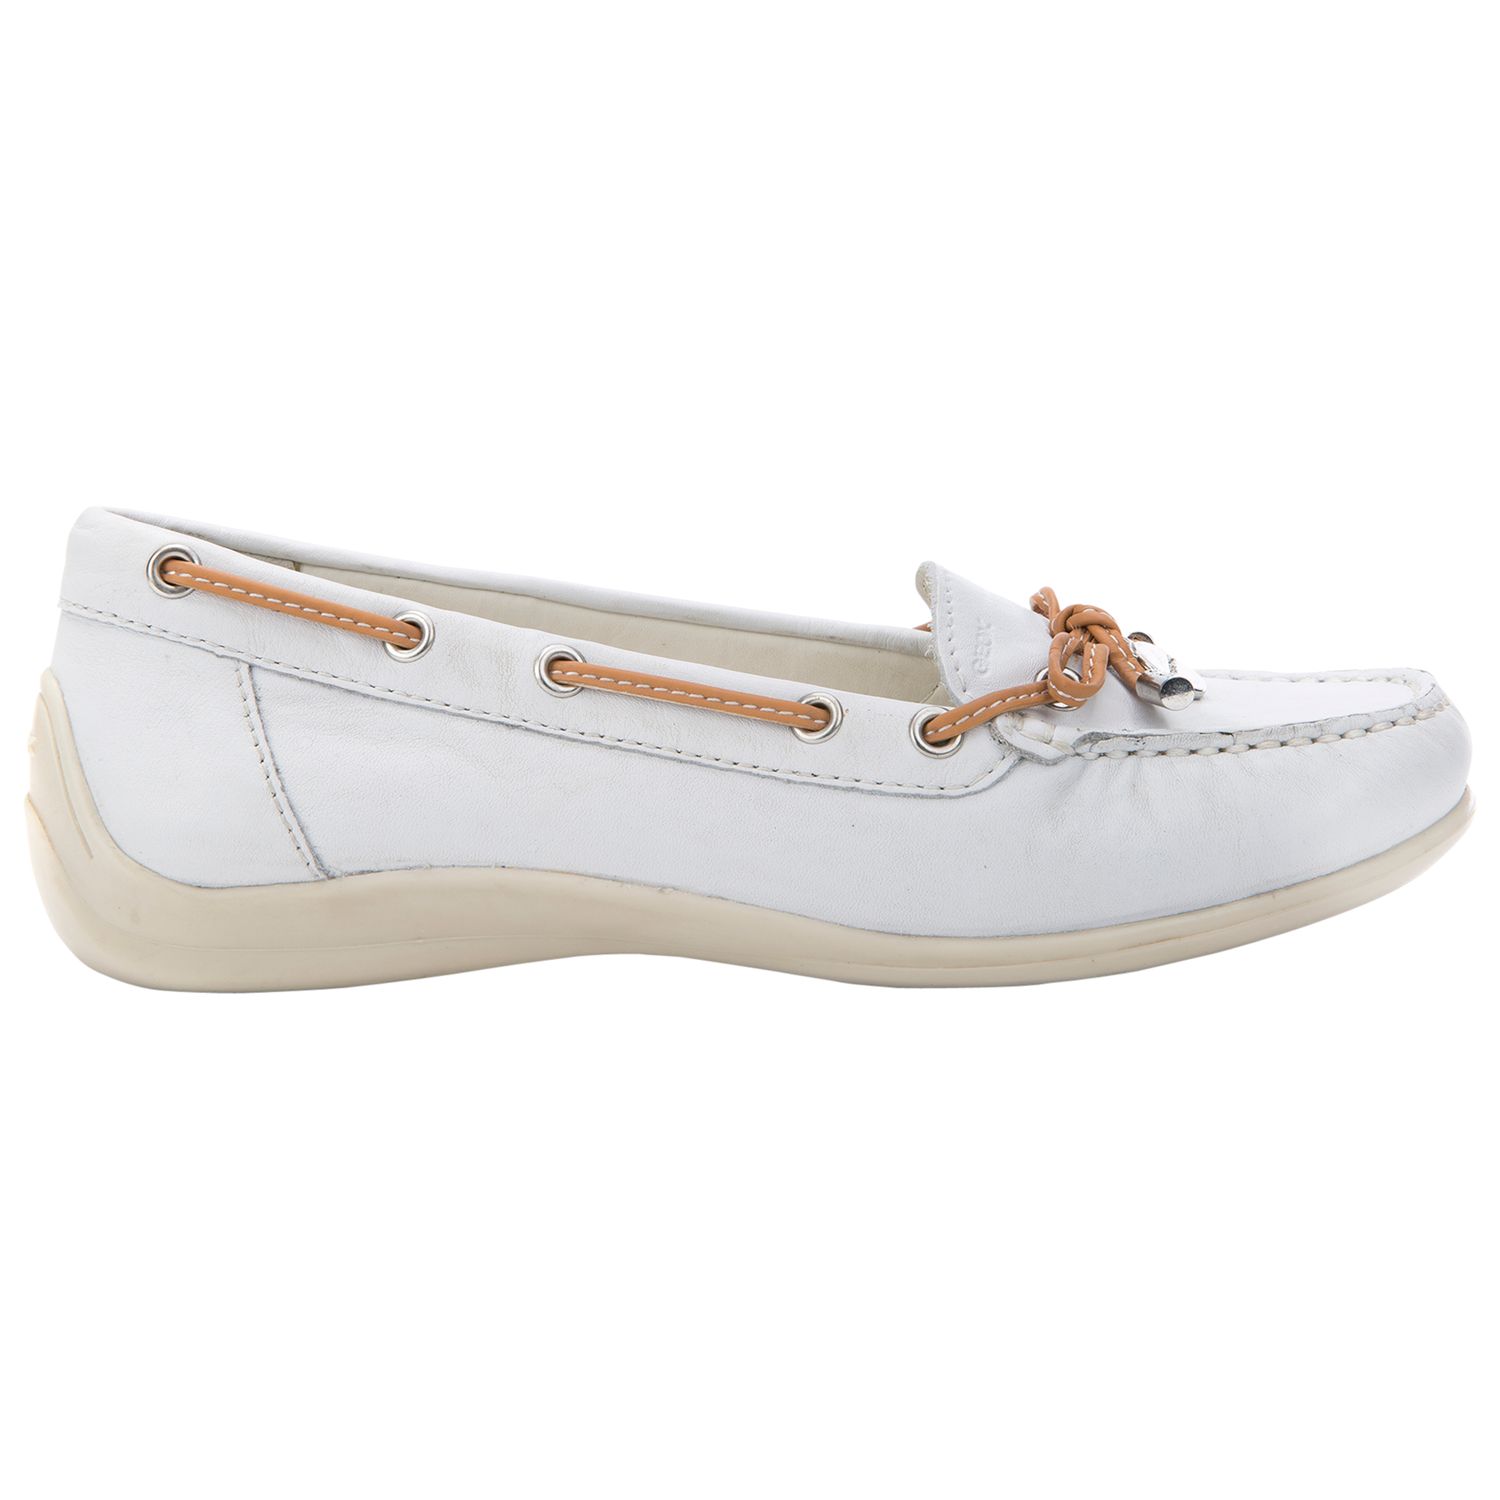 Geox Yuki Flat Loafers, White Leather